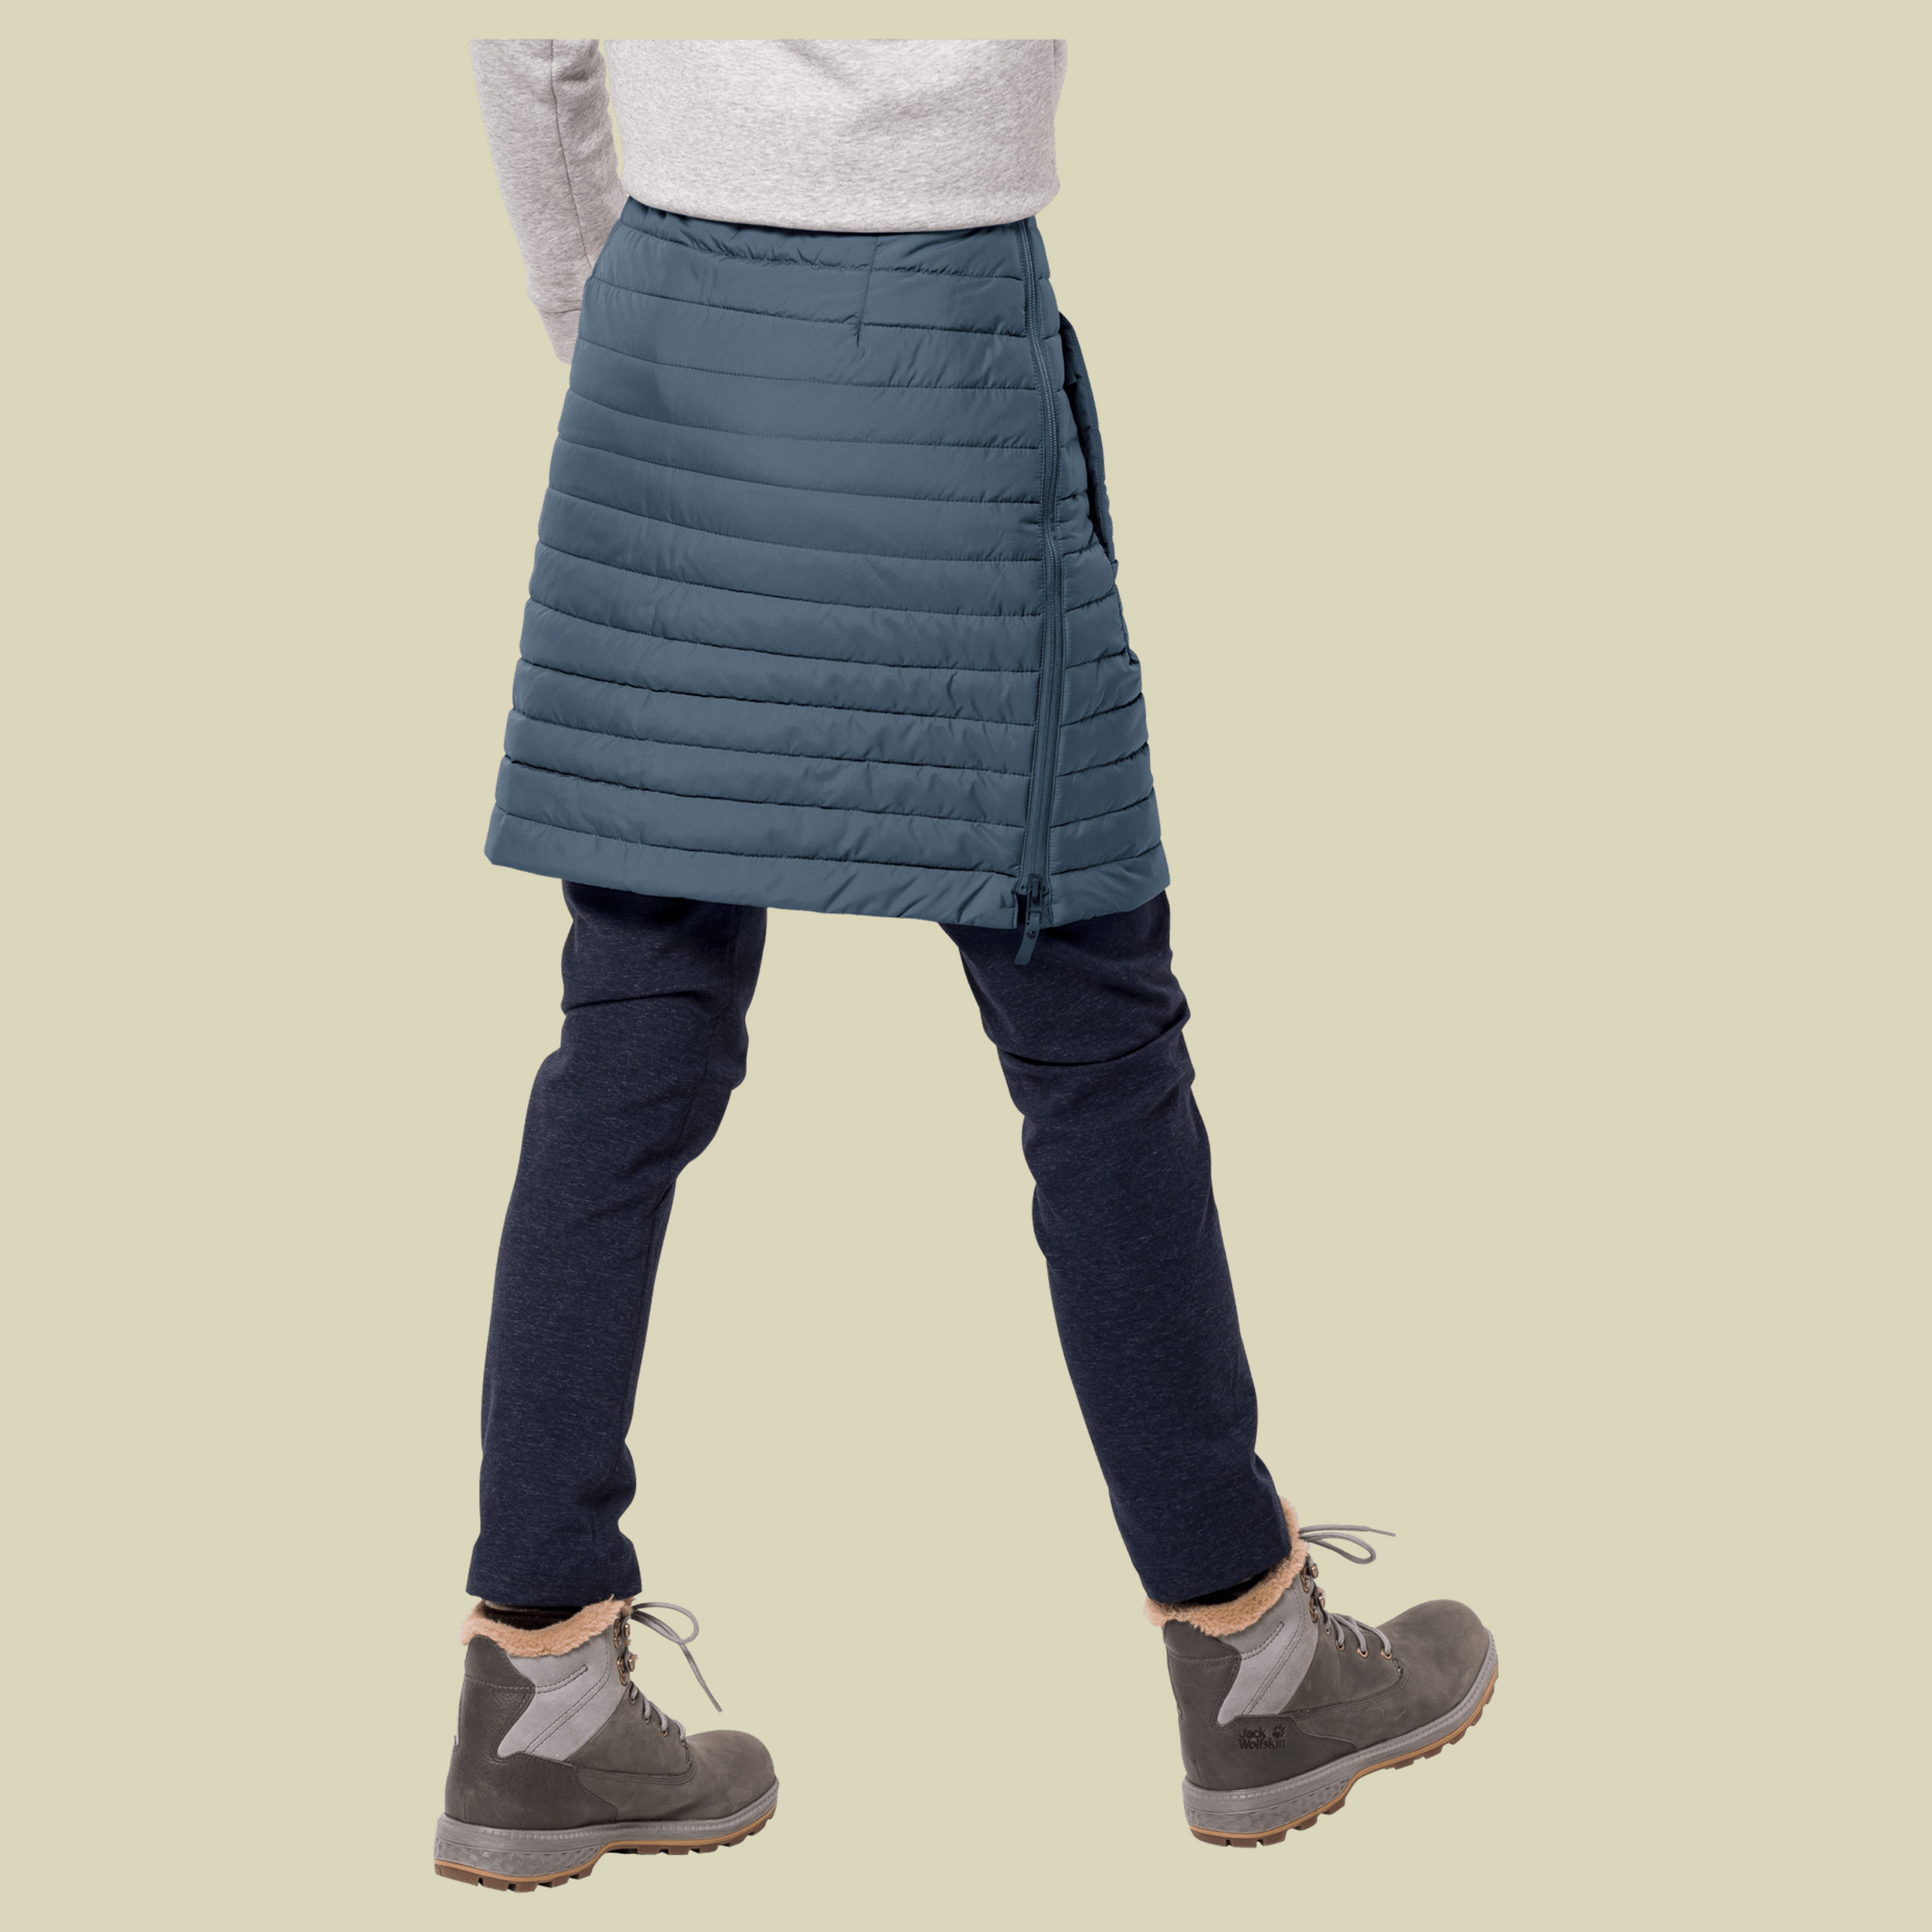 Iceguard Skirt  Größe S Farbe frost blue